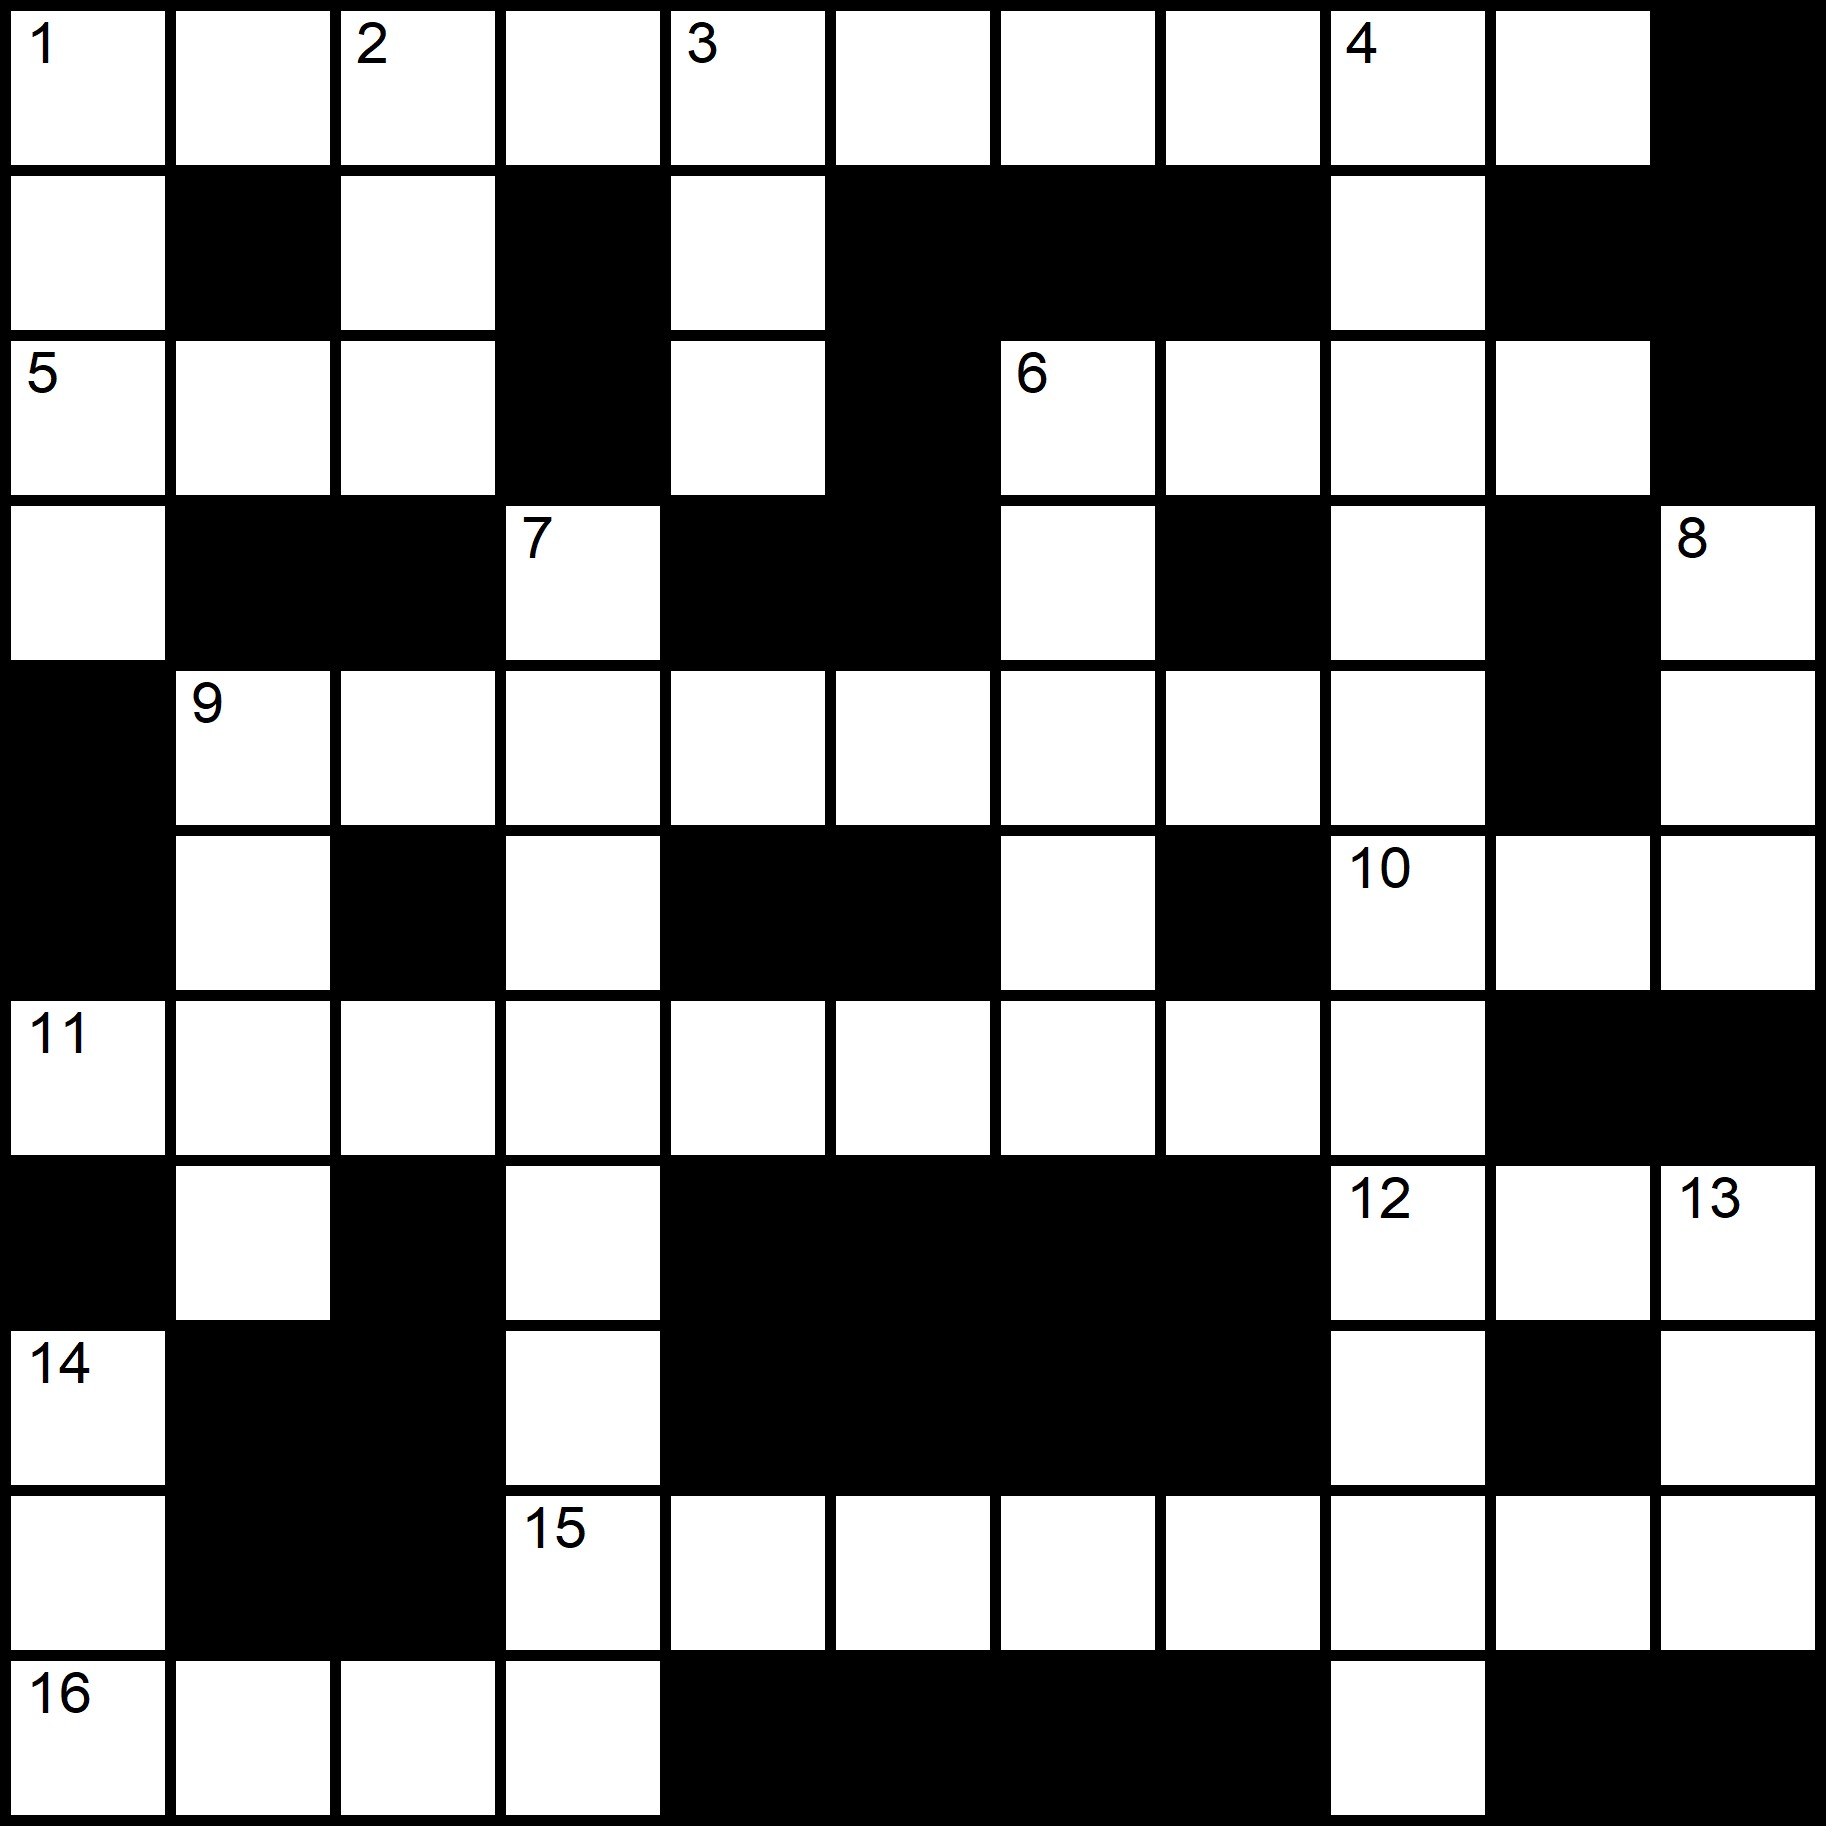 Easy Crosswords PDF -
Placidus Flora - Crossword number nineteen